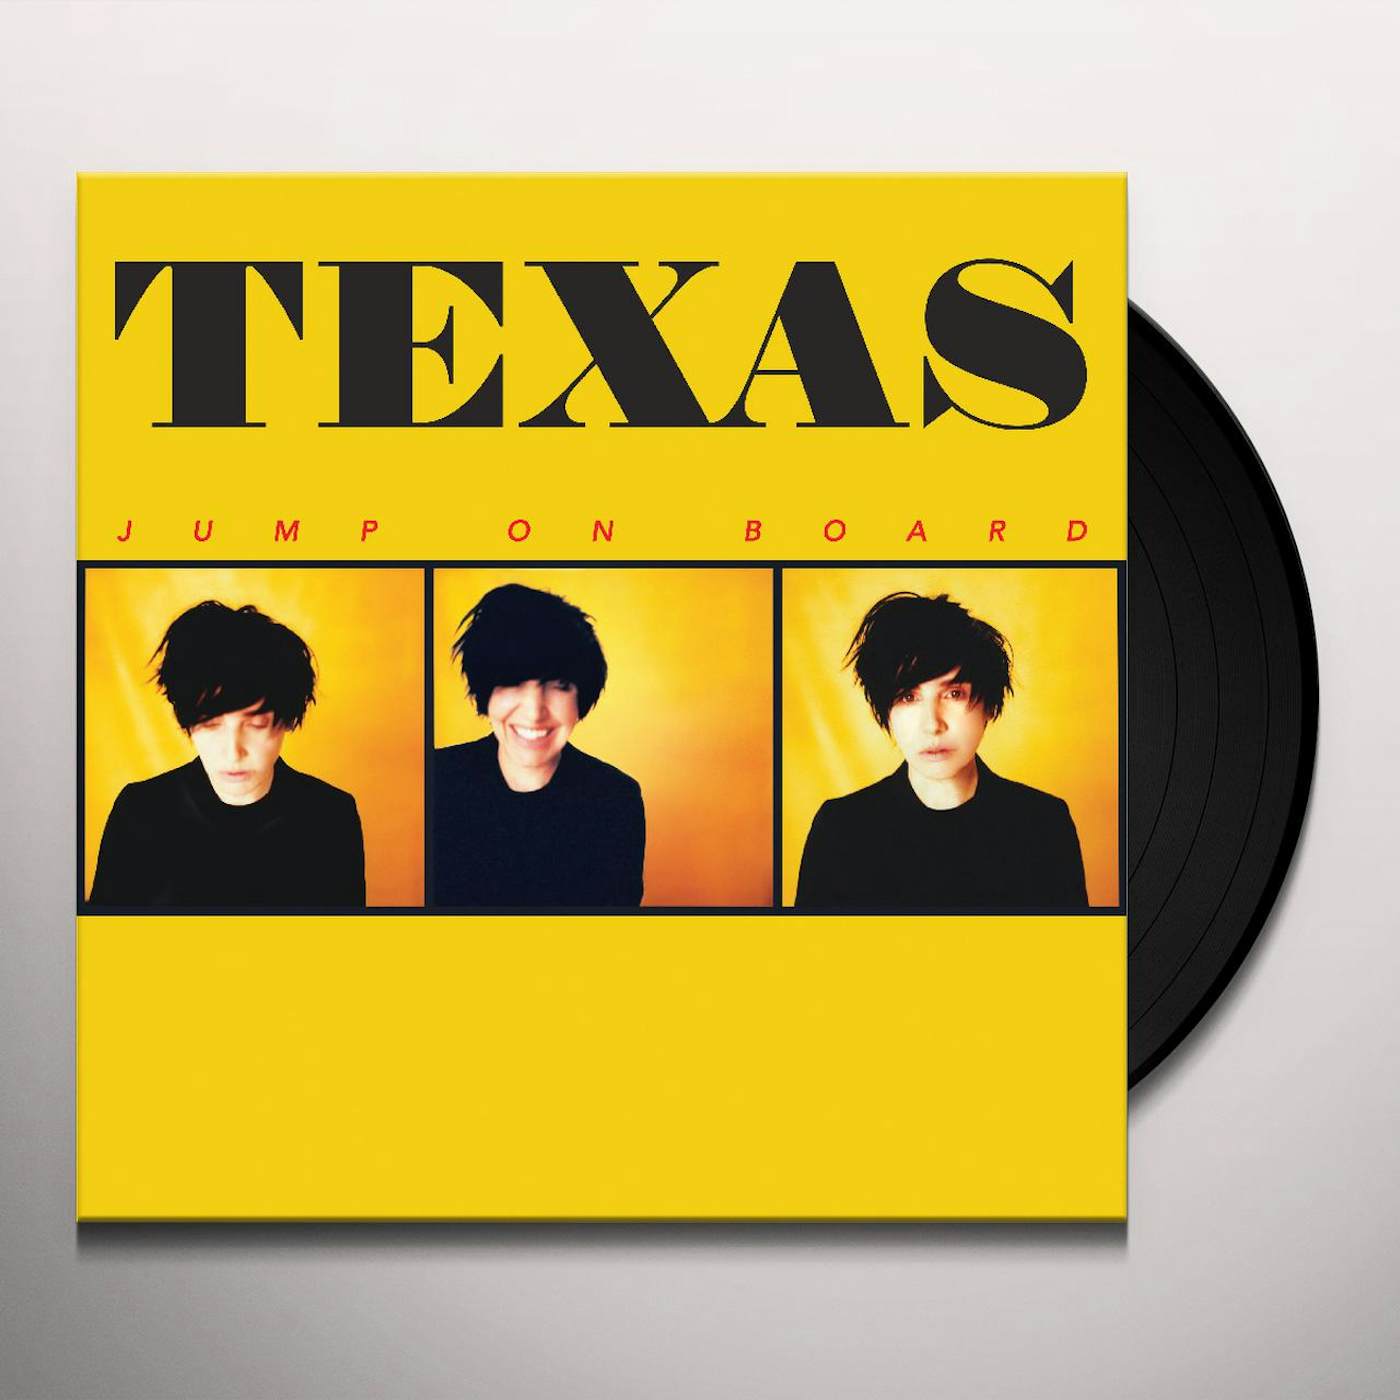 Texas Jump on Board Vinyl Record